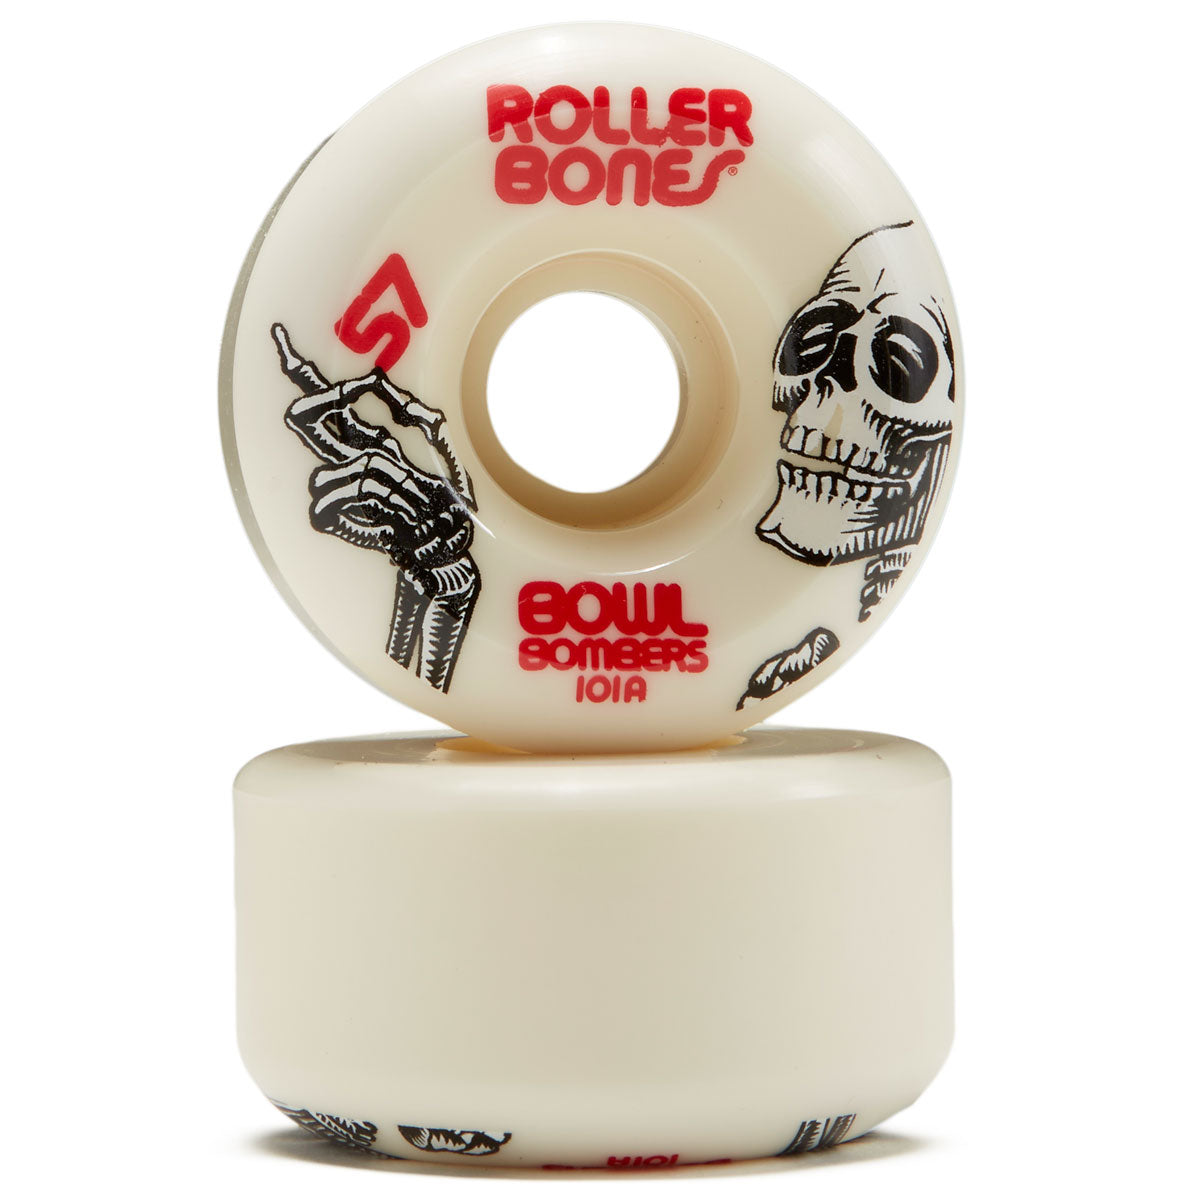 Rollerbones Bowl Bombers 101A Skate Wheels - White - 57mm image 2